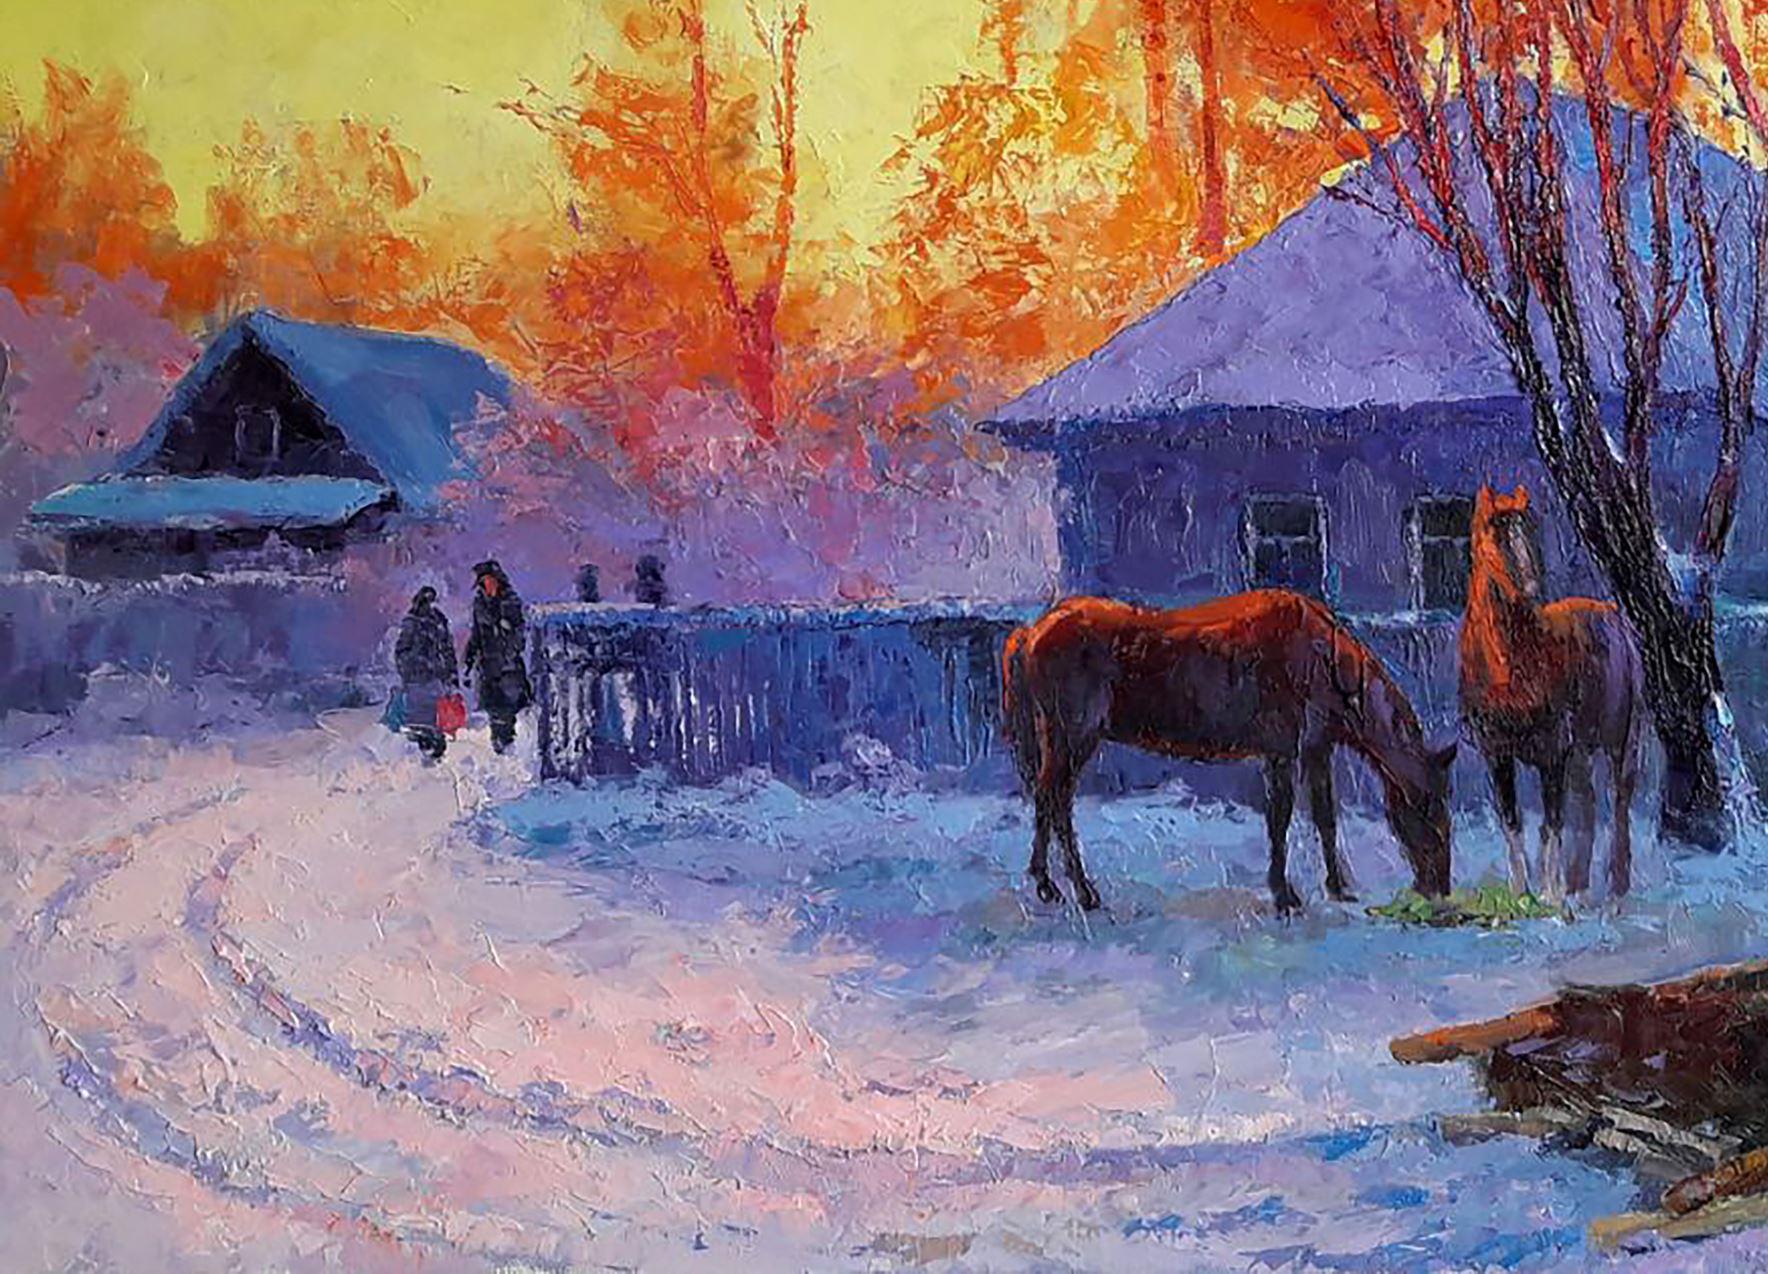 Artist: Boris Serdyuk 
Work: Original oil painting, handmade artwork, one of a kind 
Medium: Oil on Canvas
Style: Impressionism
Year: 2020
Title: Winter Evening
Size: 27.5